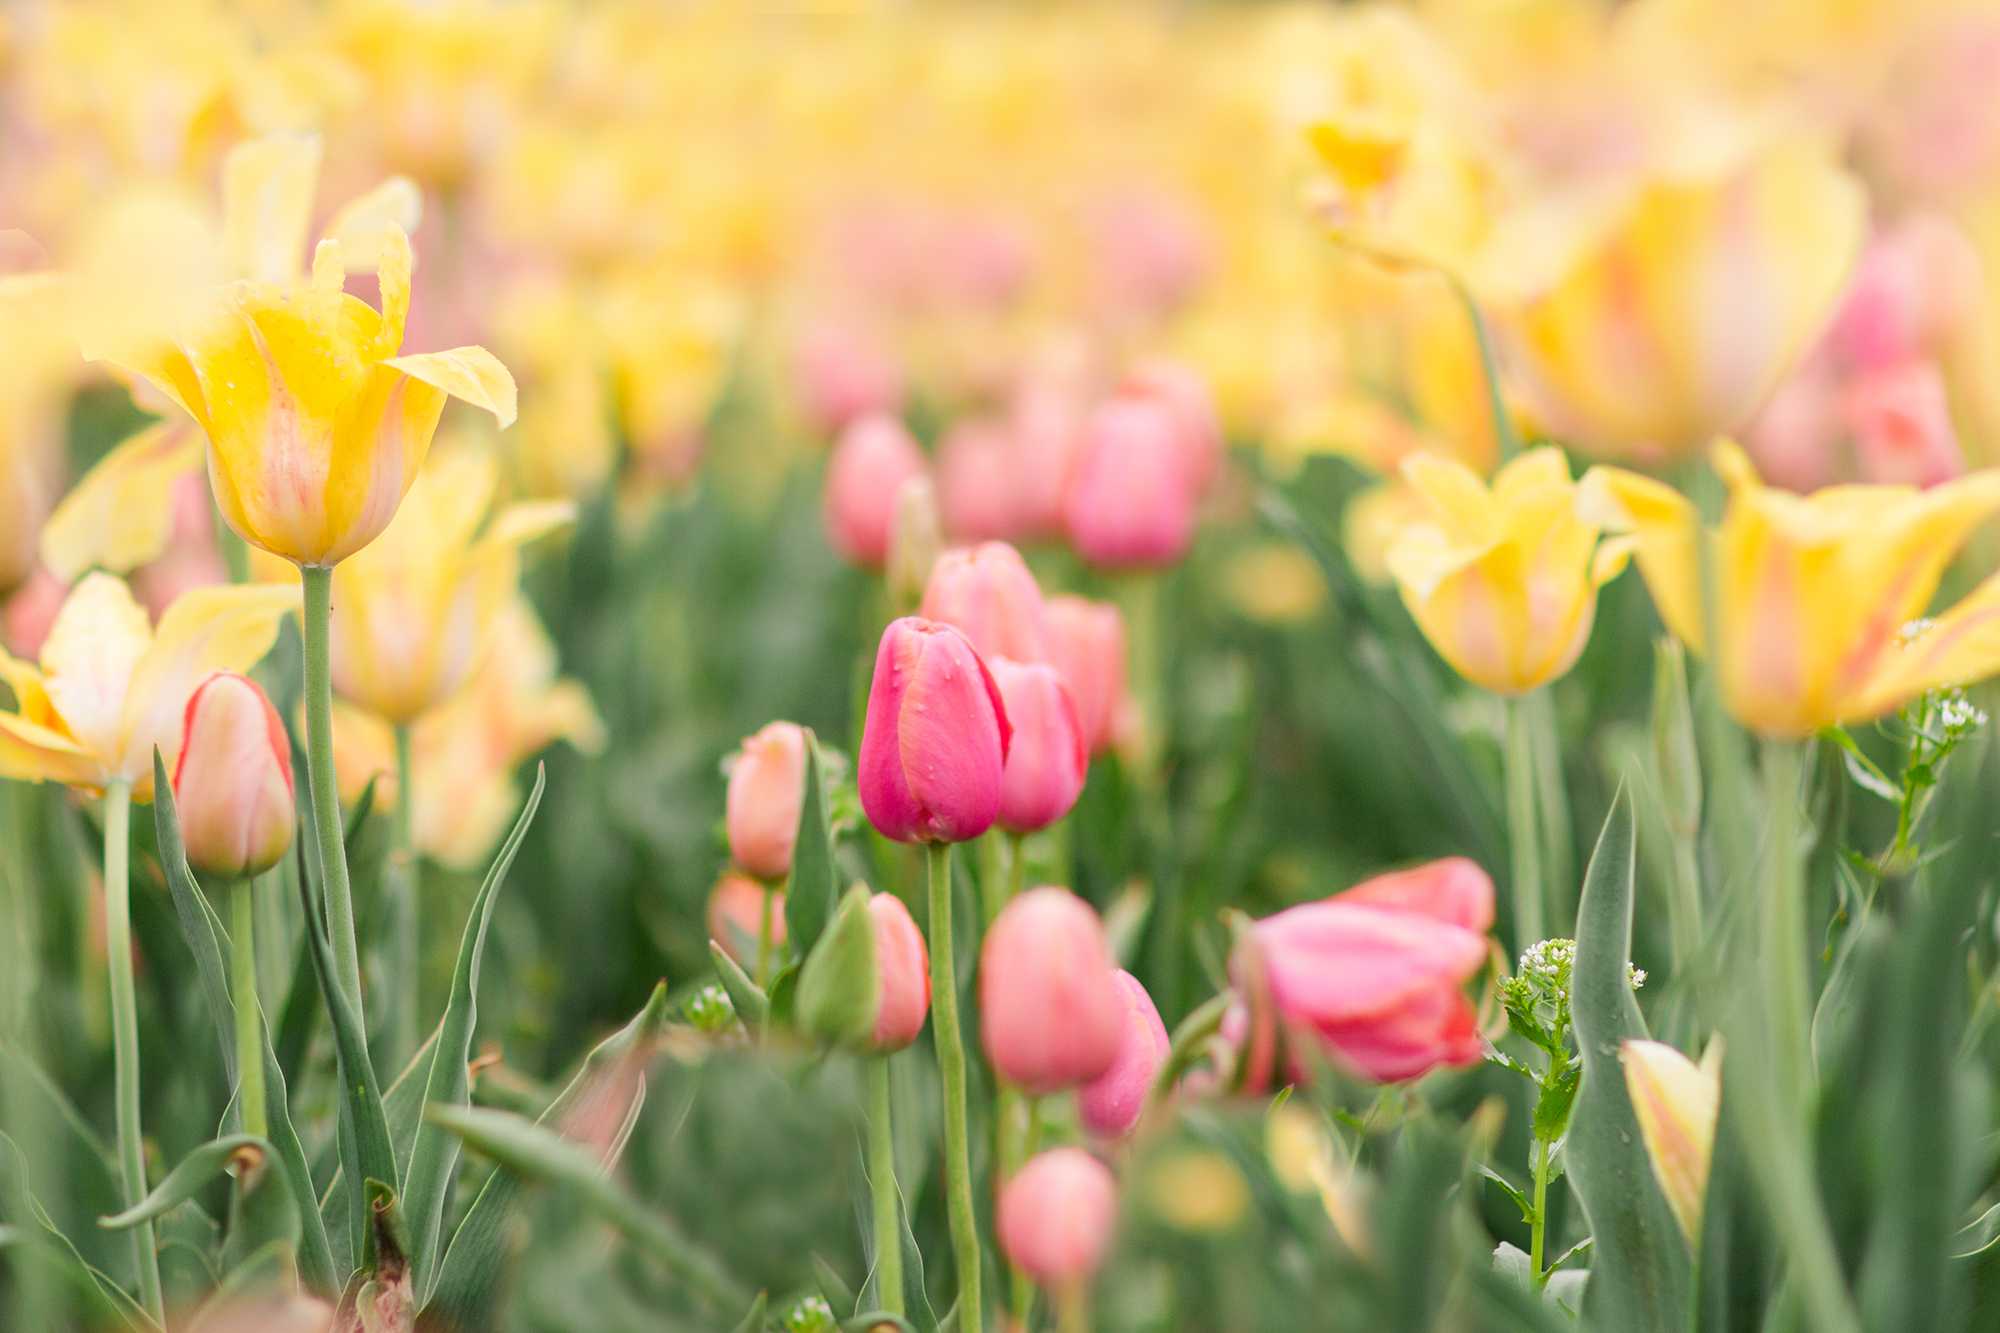 Yellow and Pink Tulips, Holland Michigan | Hayley Moore Photography | Fort Wayne, Indiana Photographer | www.hayleymoore.com